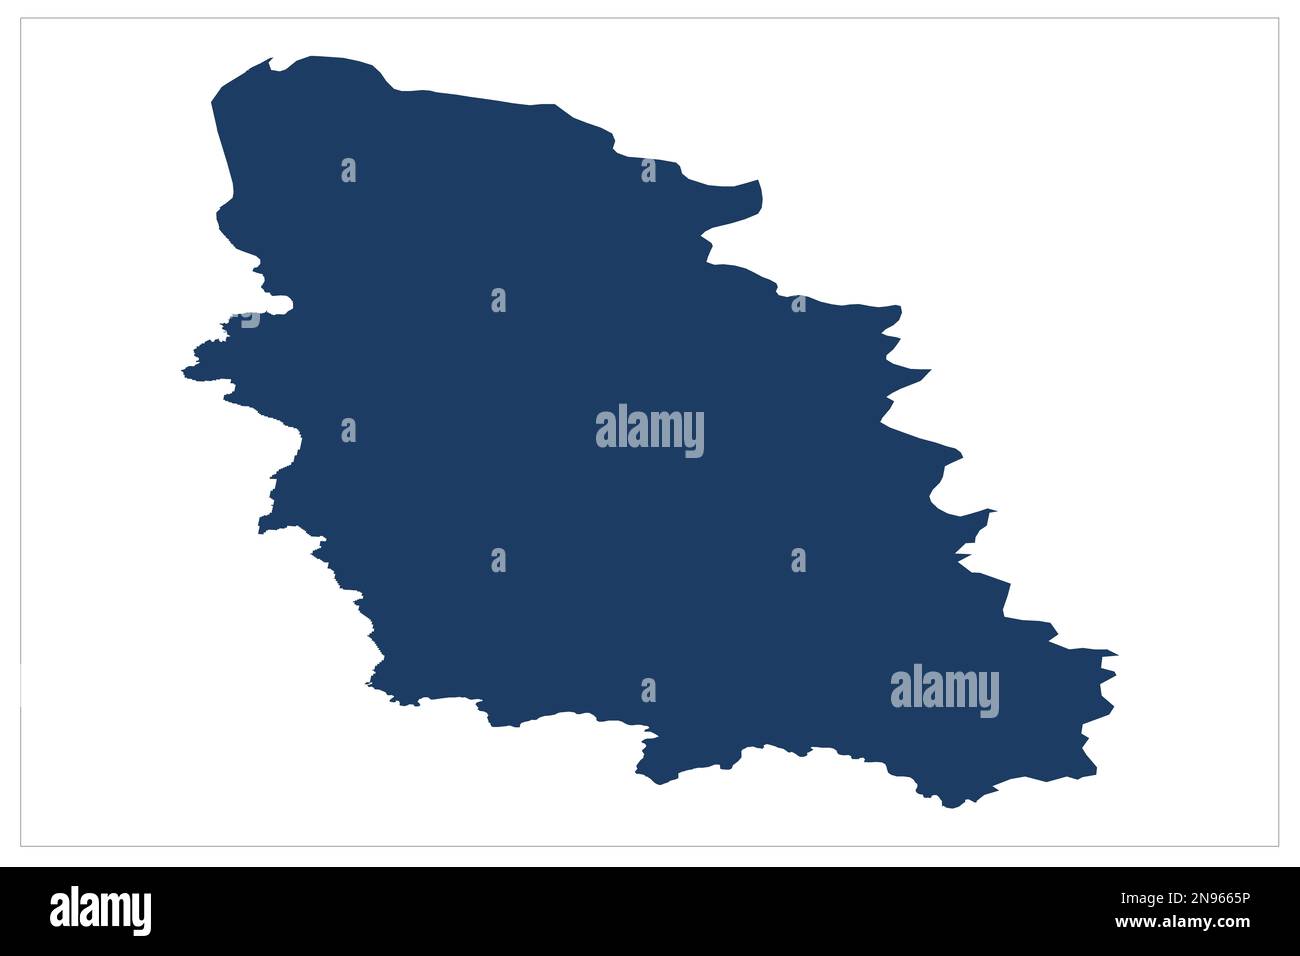 Province of the Don Cossacks, Rostovskaya Oblast , Pskovskaya Oblast , Pskav Russia State Province Map Illustration on white background using blue col Stock Photo